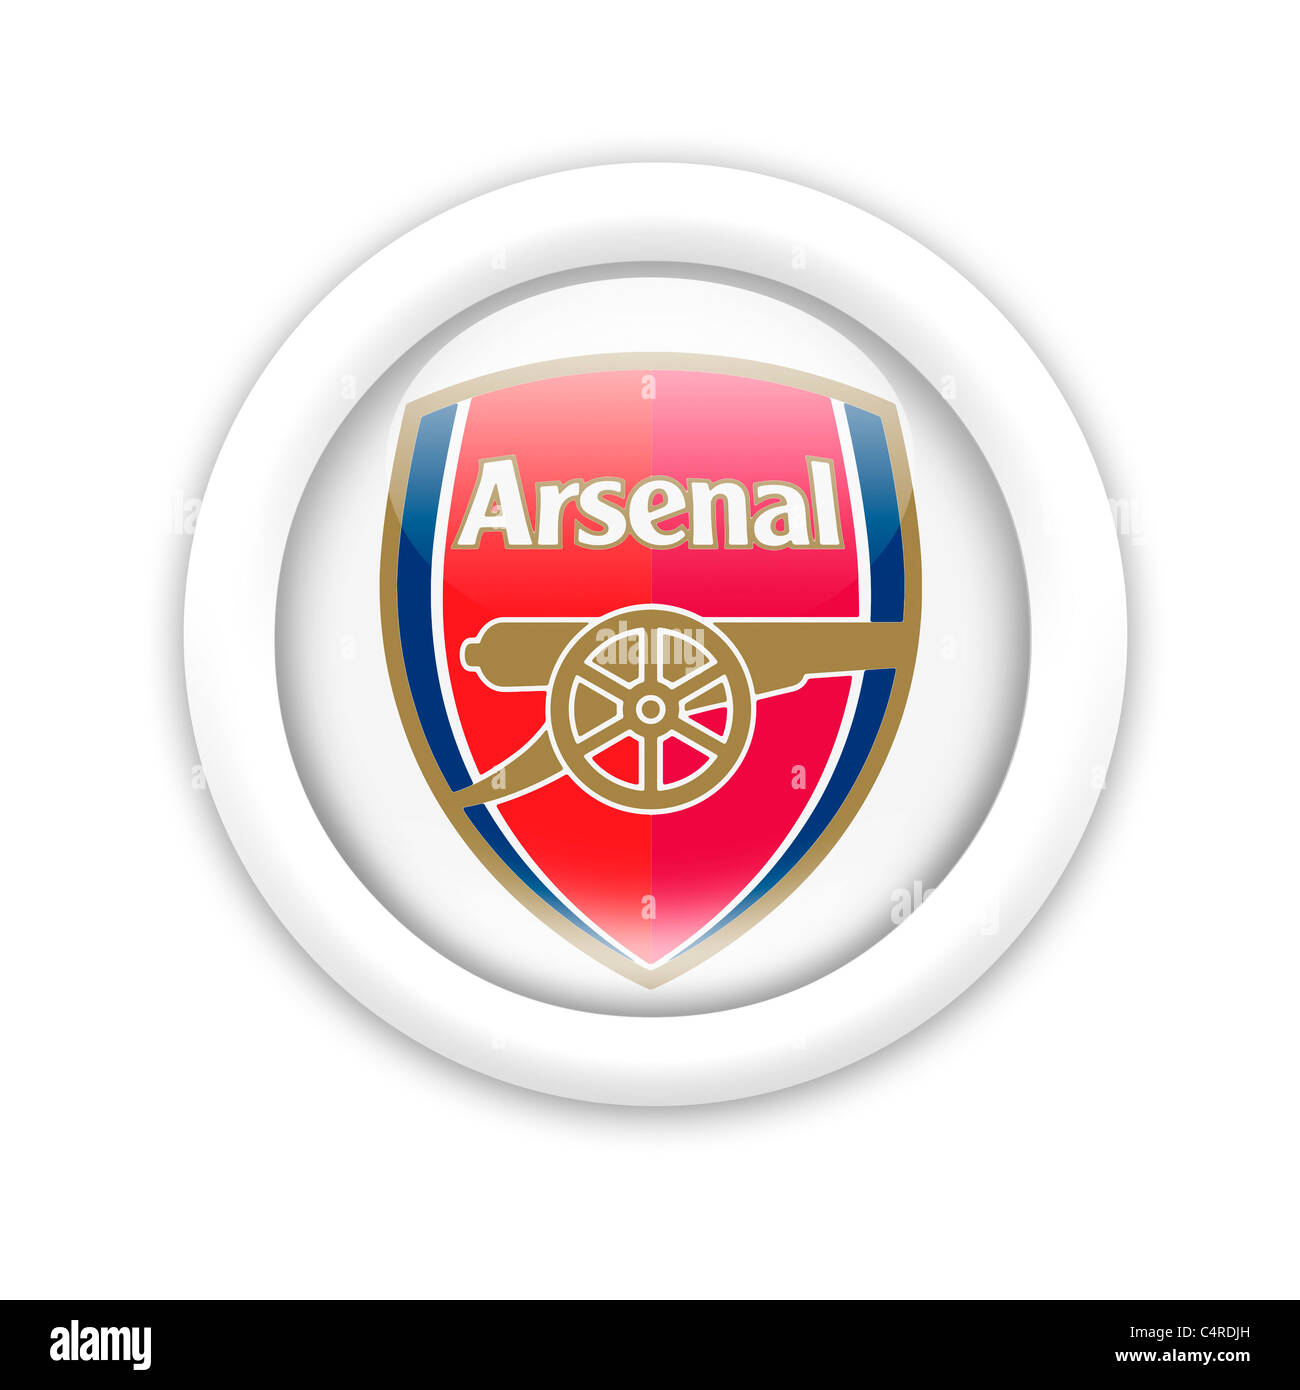 Arsenal FC logo symbol flag Stock Photo